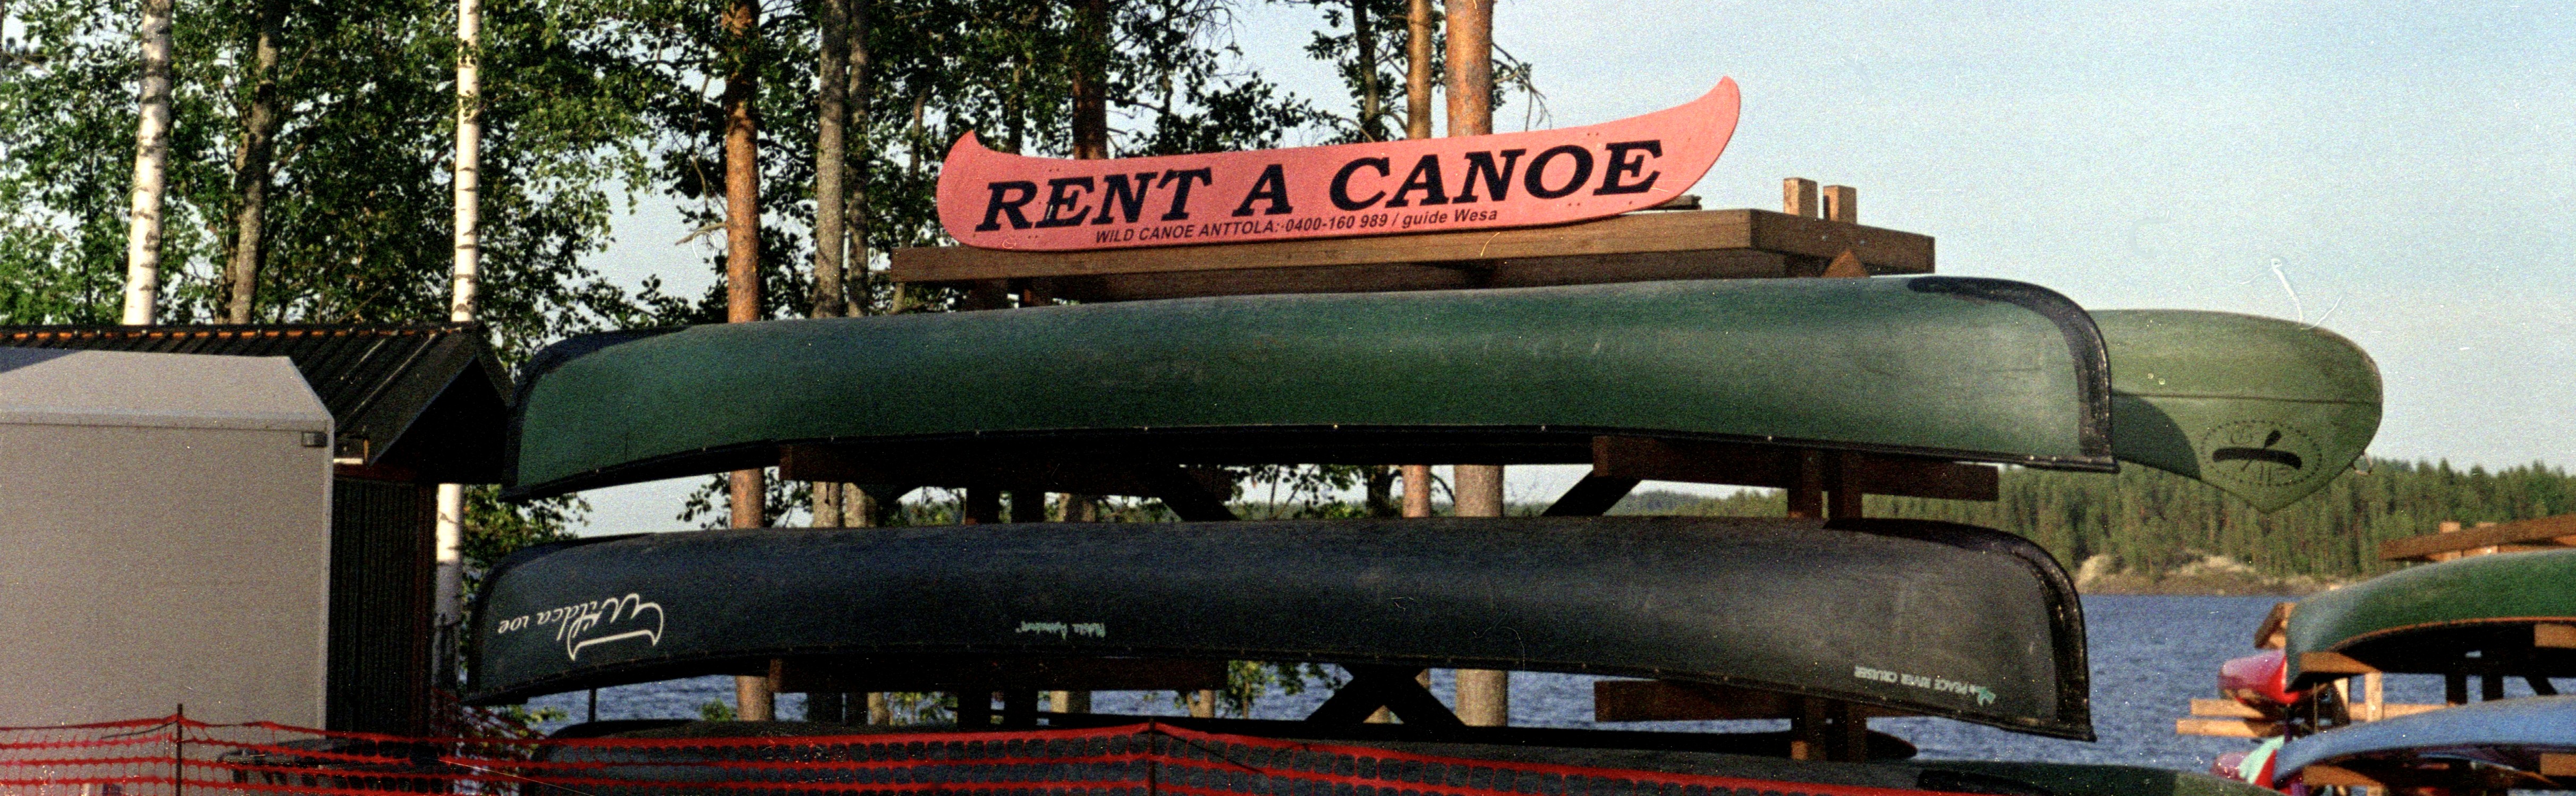 rent a canoe